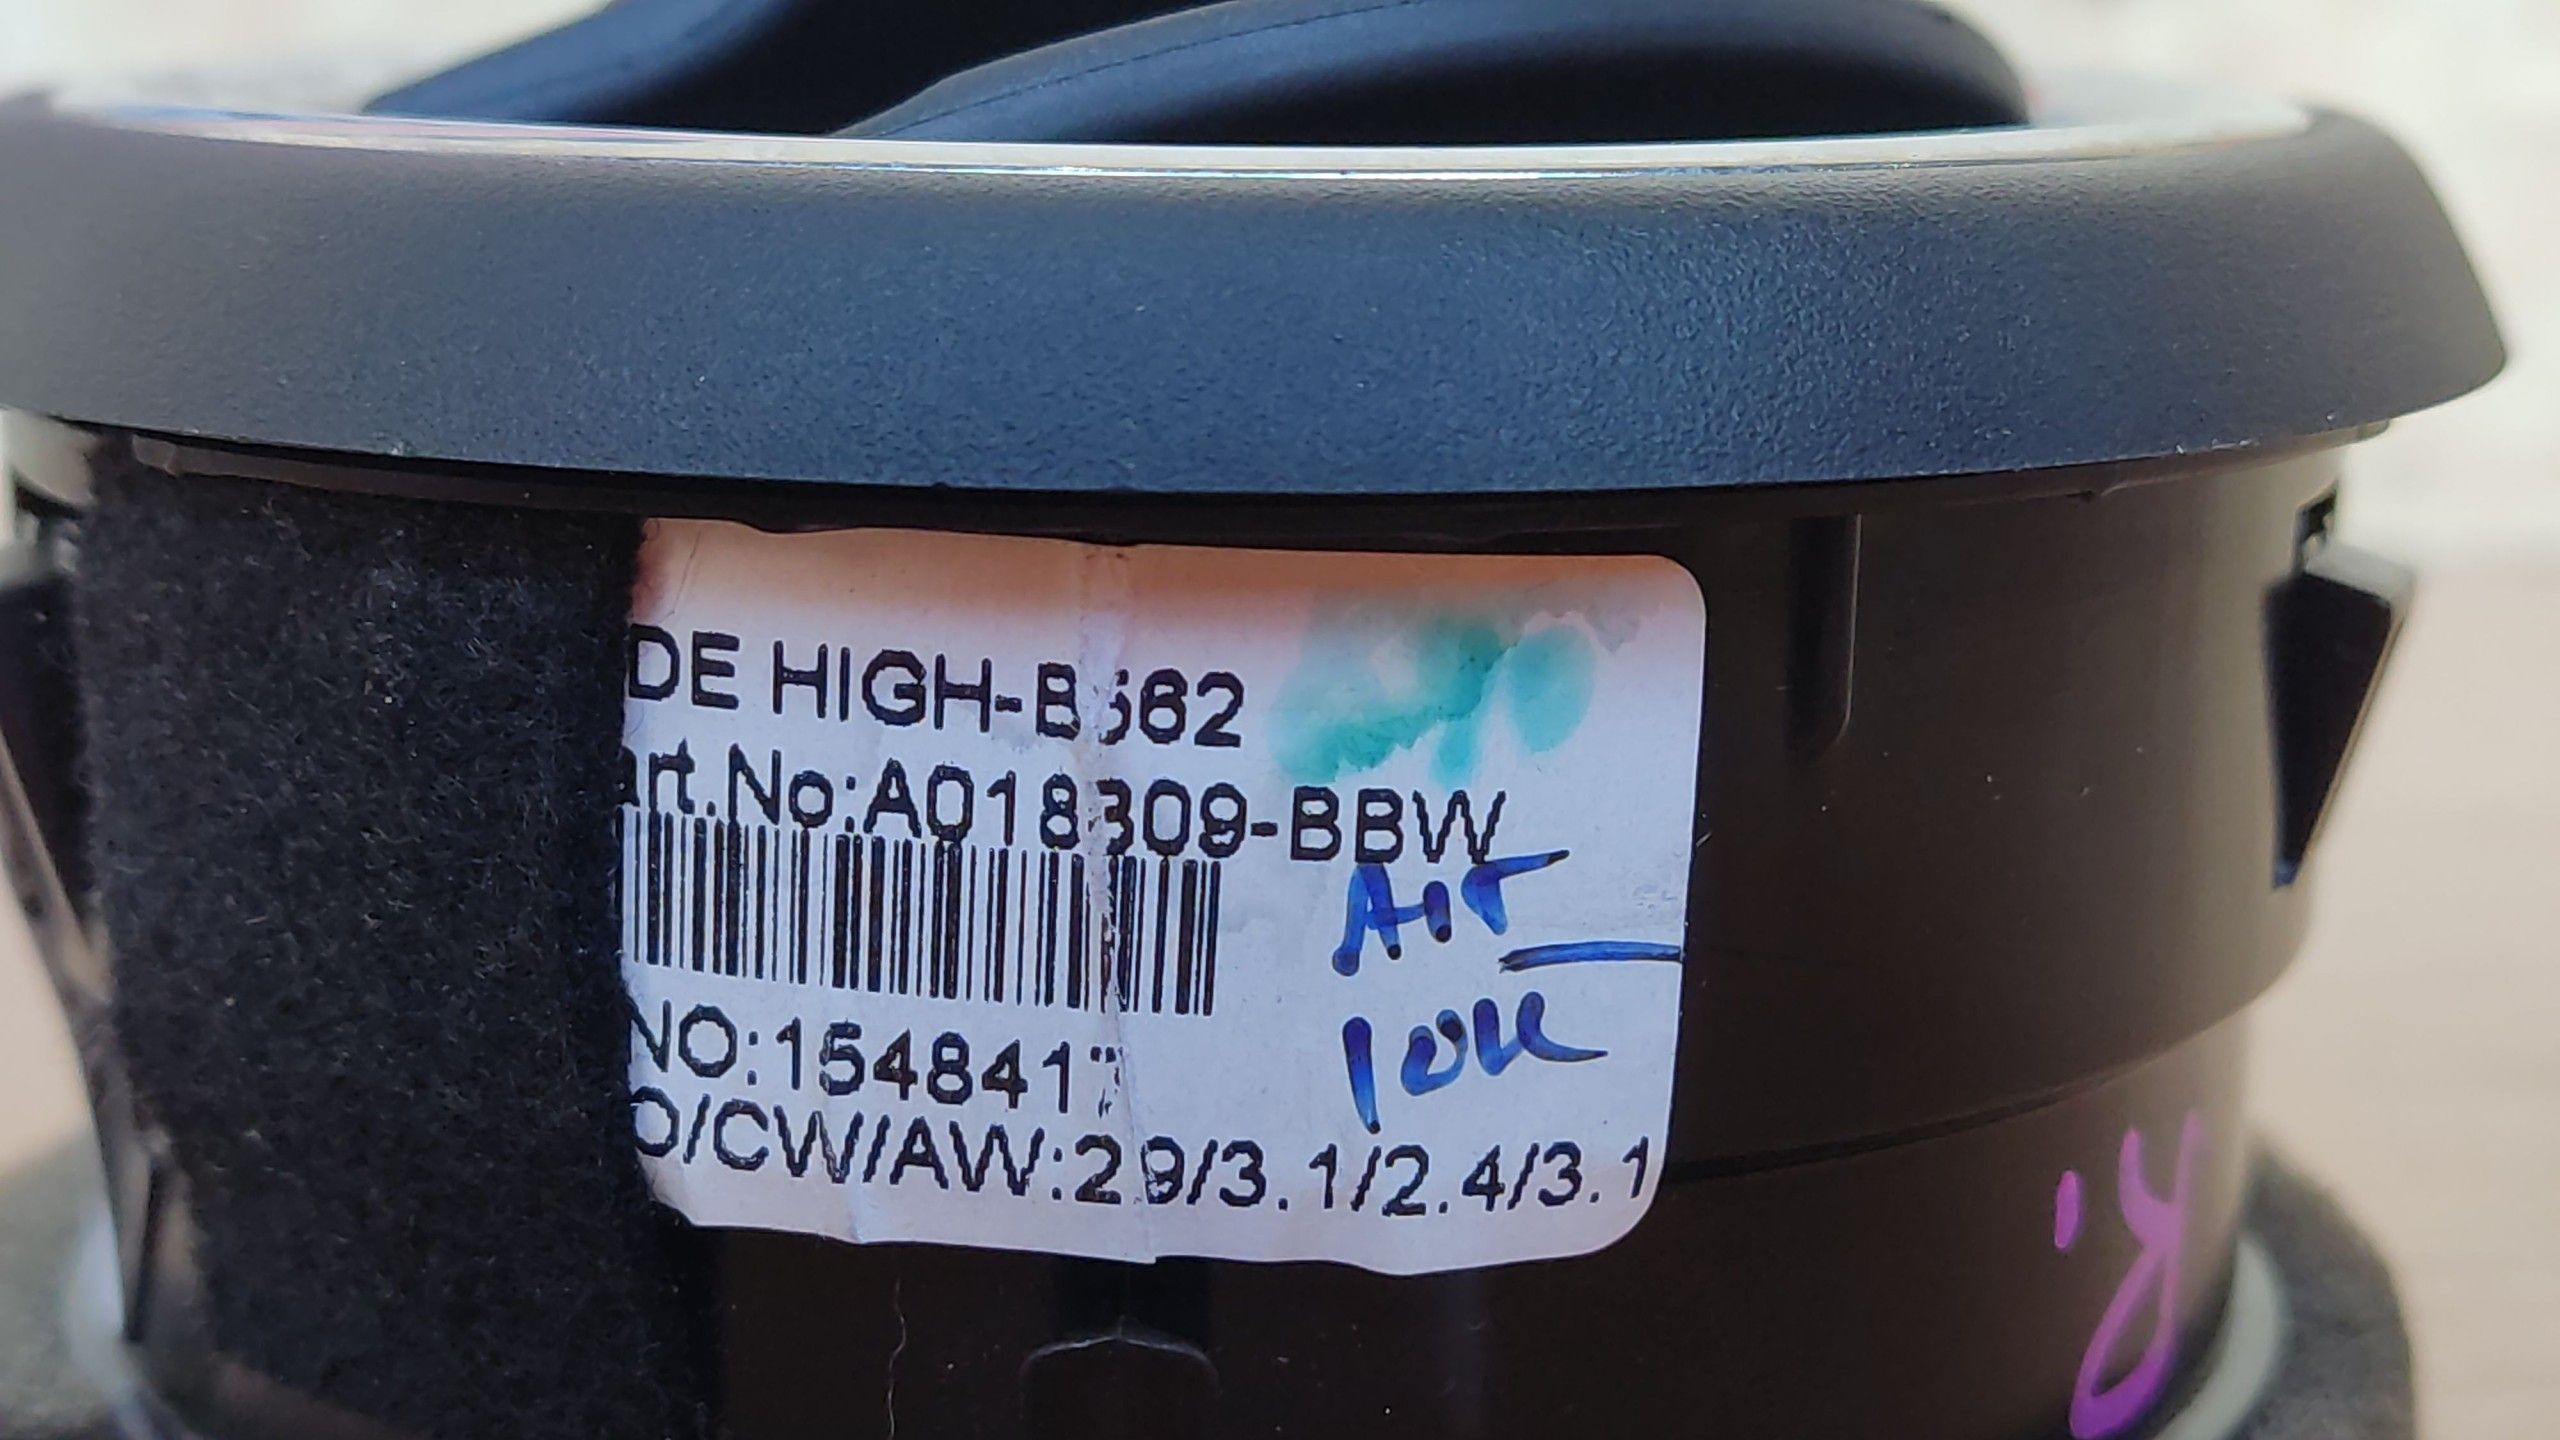 Ford Ka + 2014- дефлектор воздуховод торпедо правый a018b09-bbw